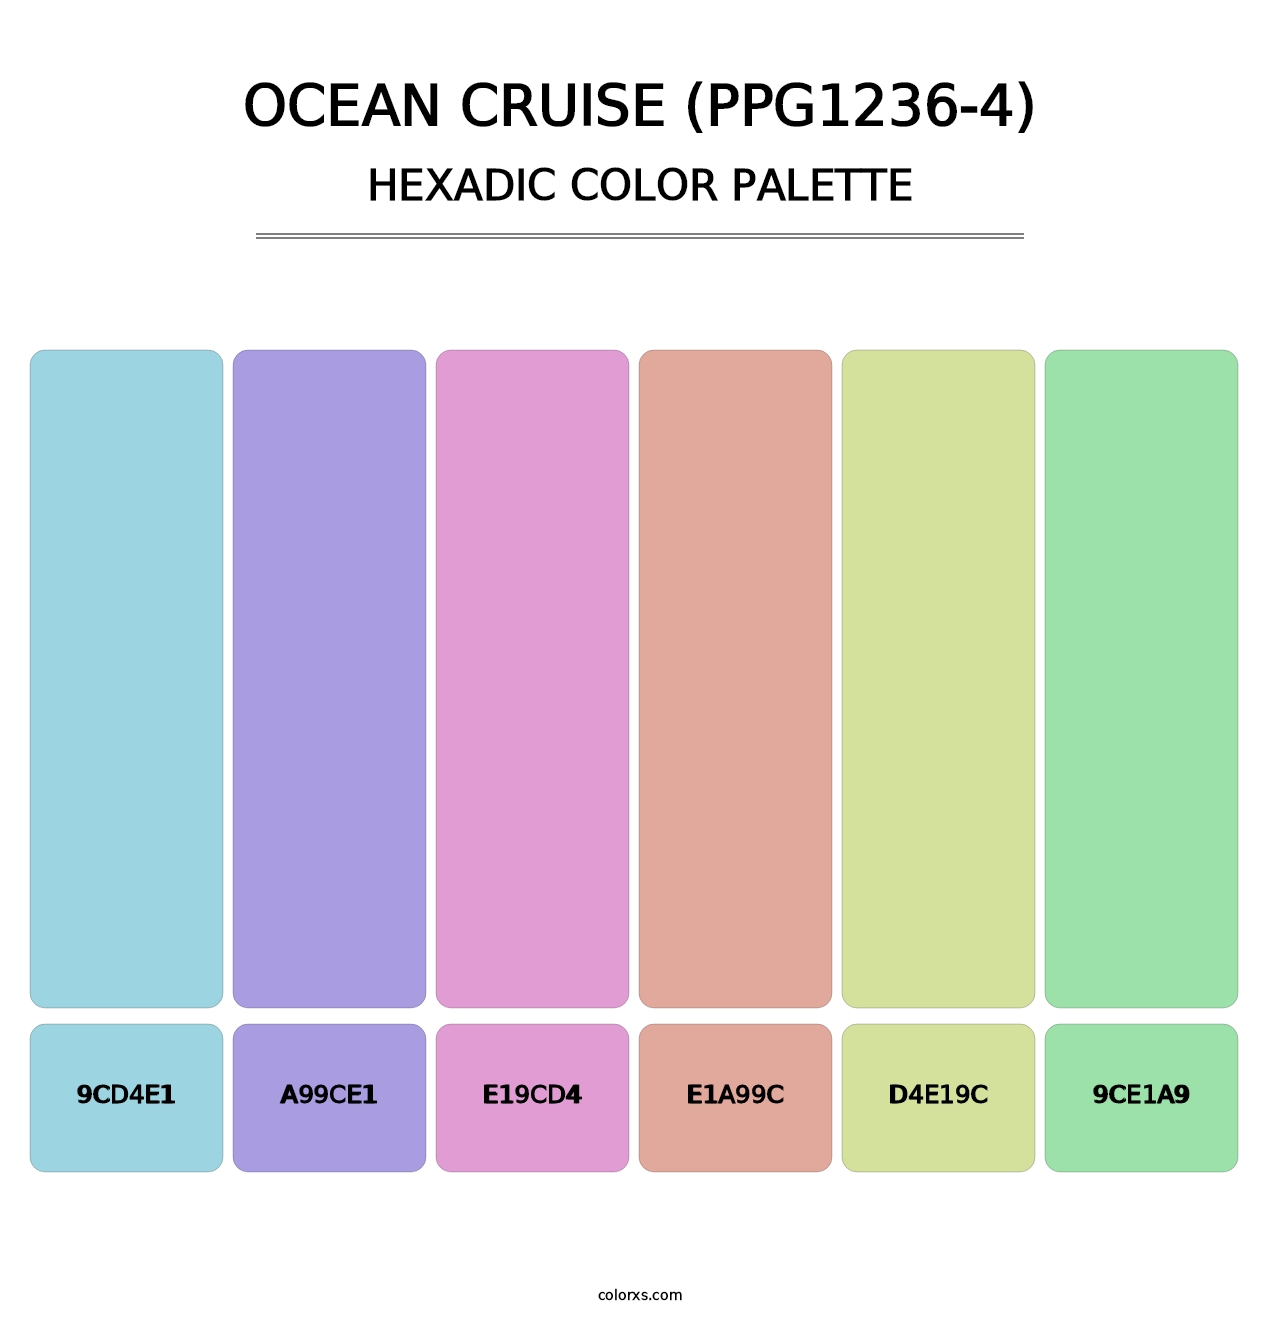 Ocean Cruise (PPG1236-4) - Hexadic Color Palette